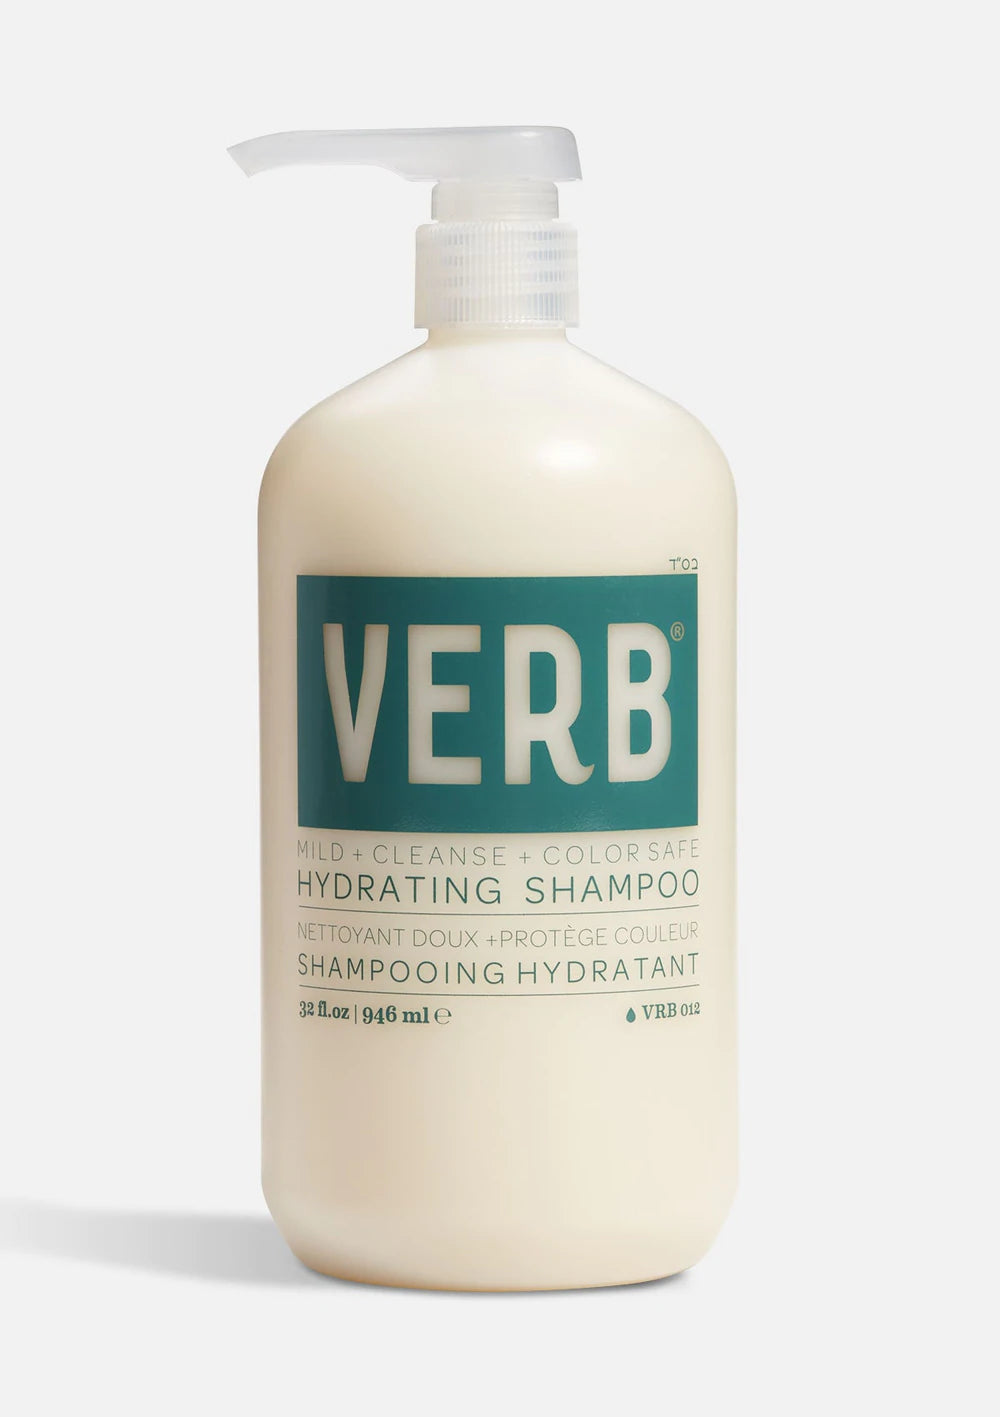 Verb Shampooing Hydratant